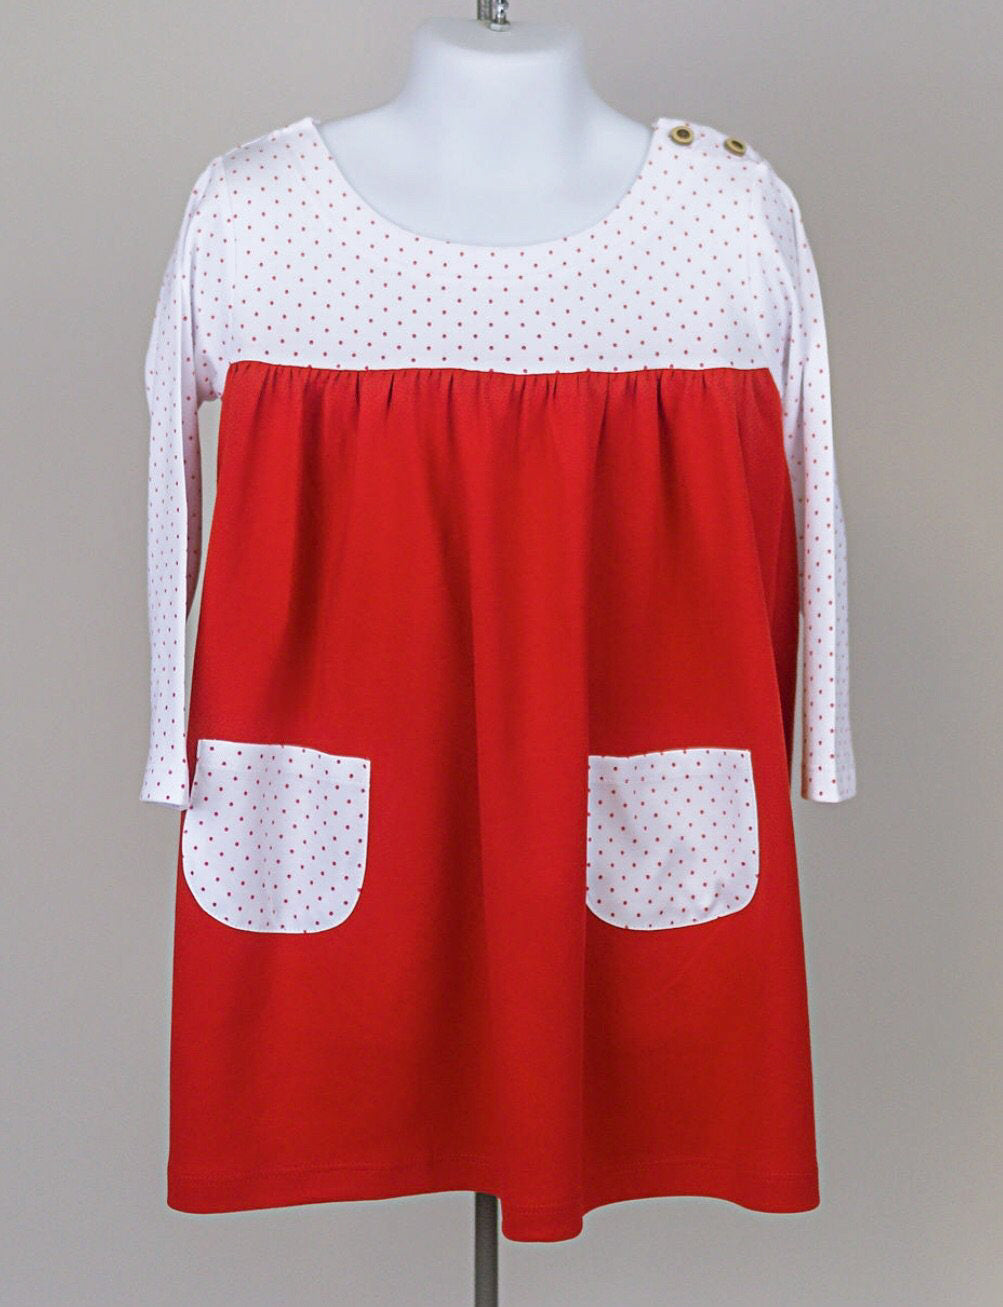 Pima boatneck dress - red bitty/ red*